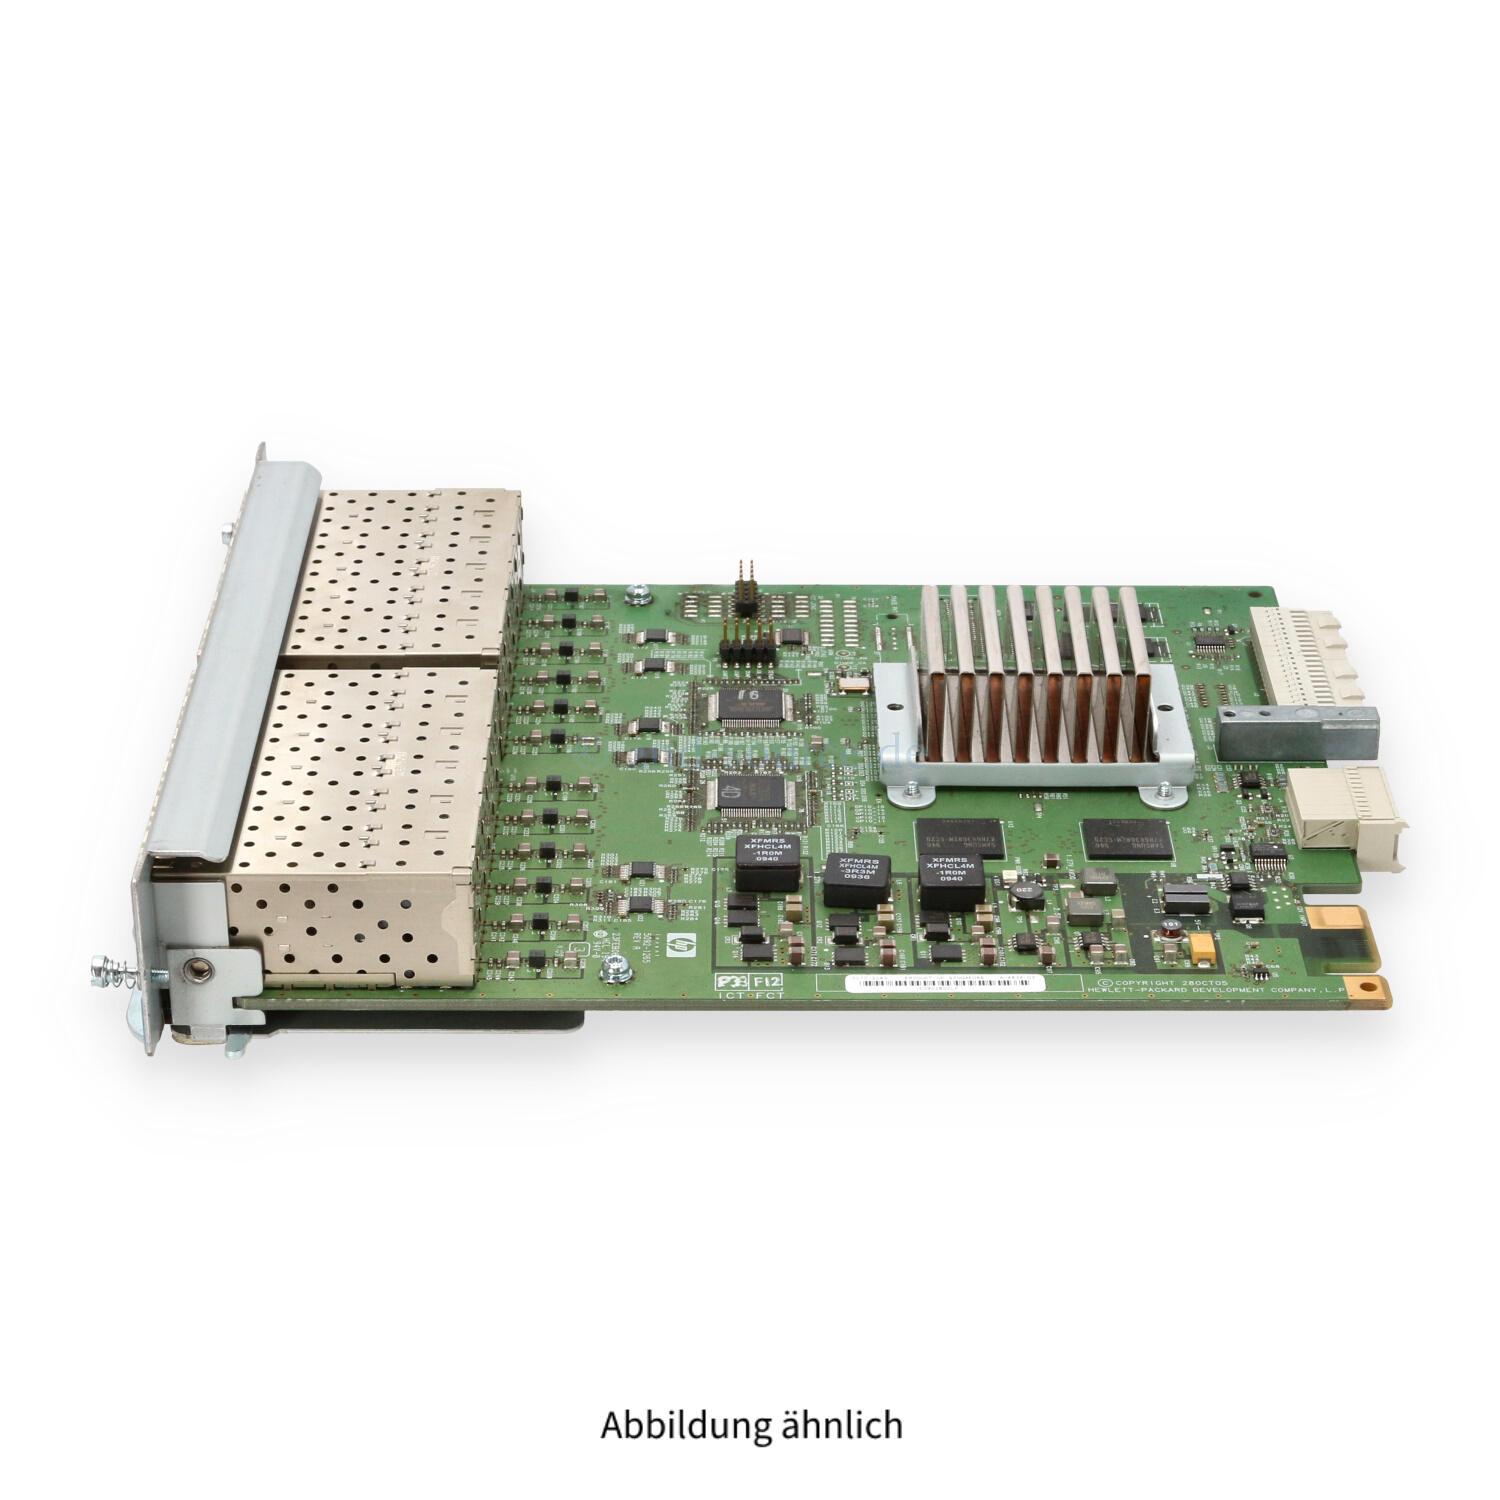 HPE ProCurve 24x SFP 1GbE zl Switch Module J8706A J8706-69001 J8706-61201